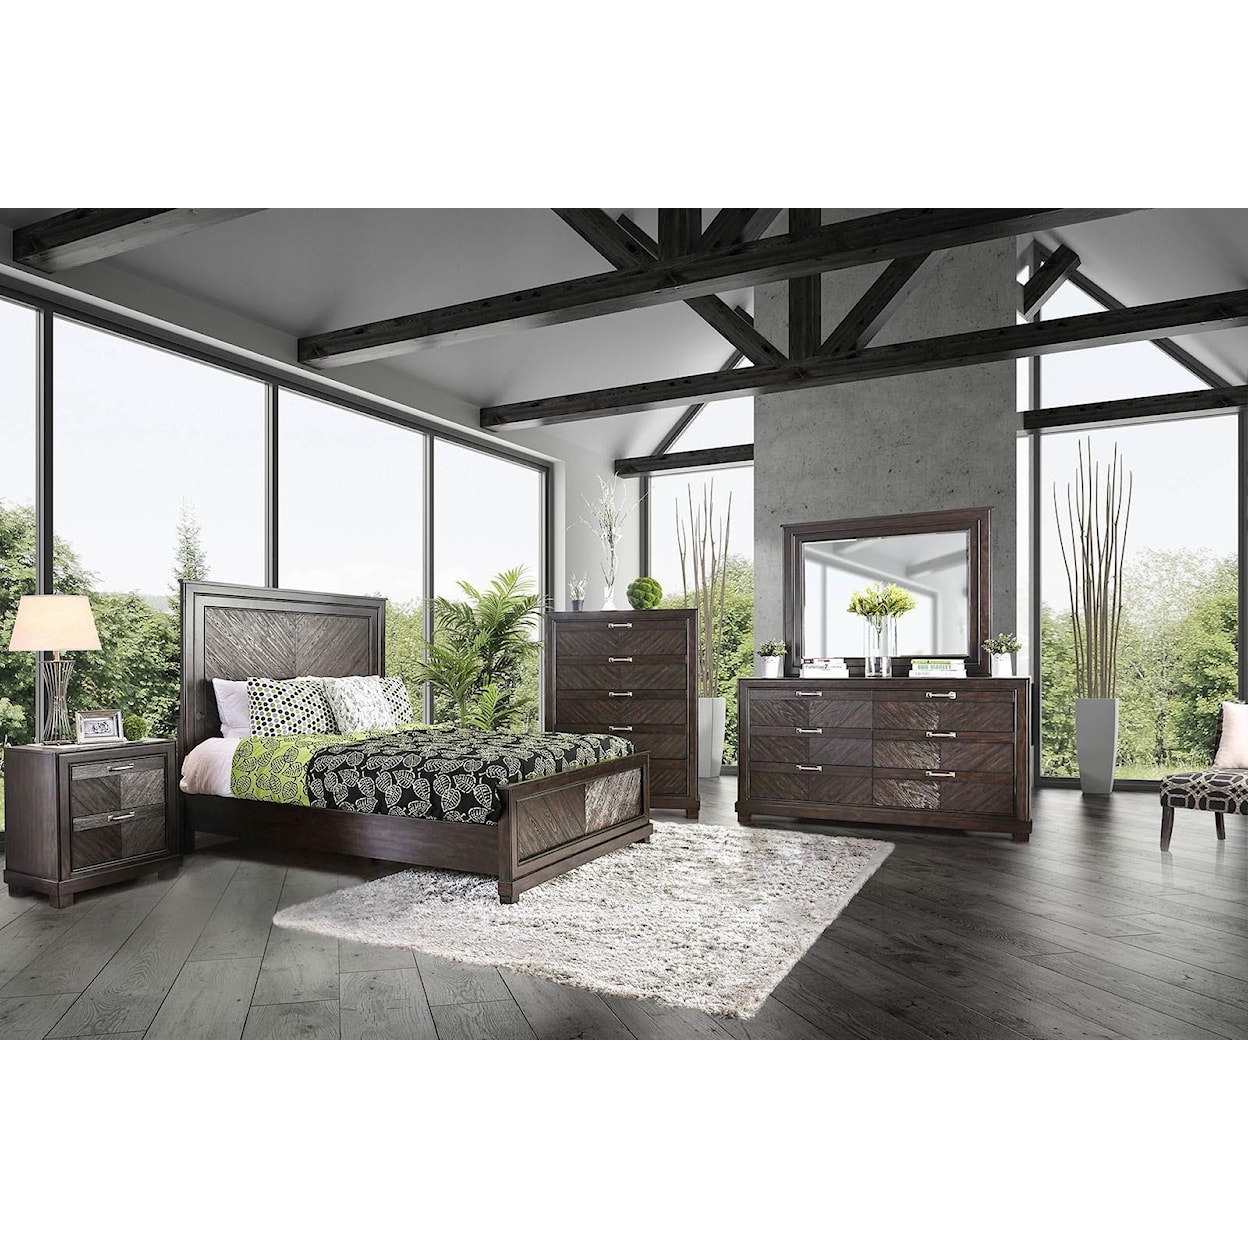 Furniture of America ARGYROS Queen Bedroom Group